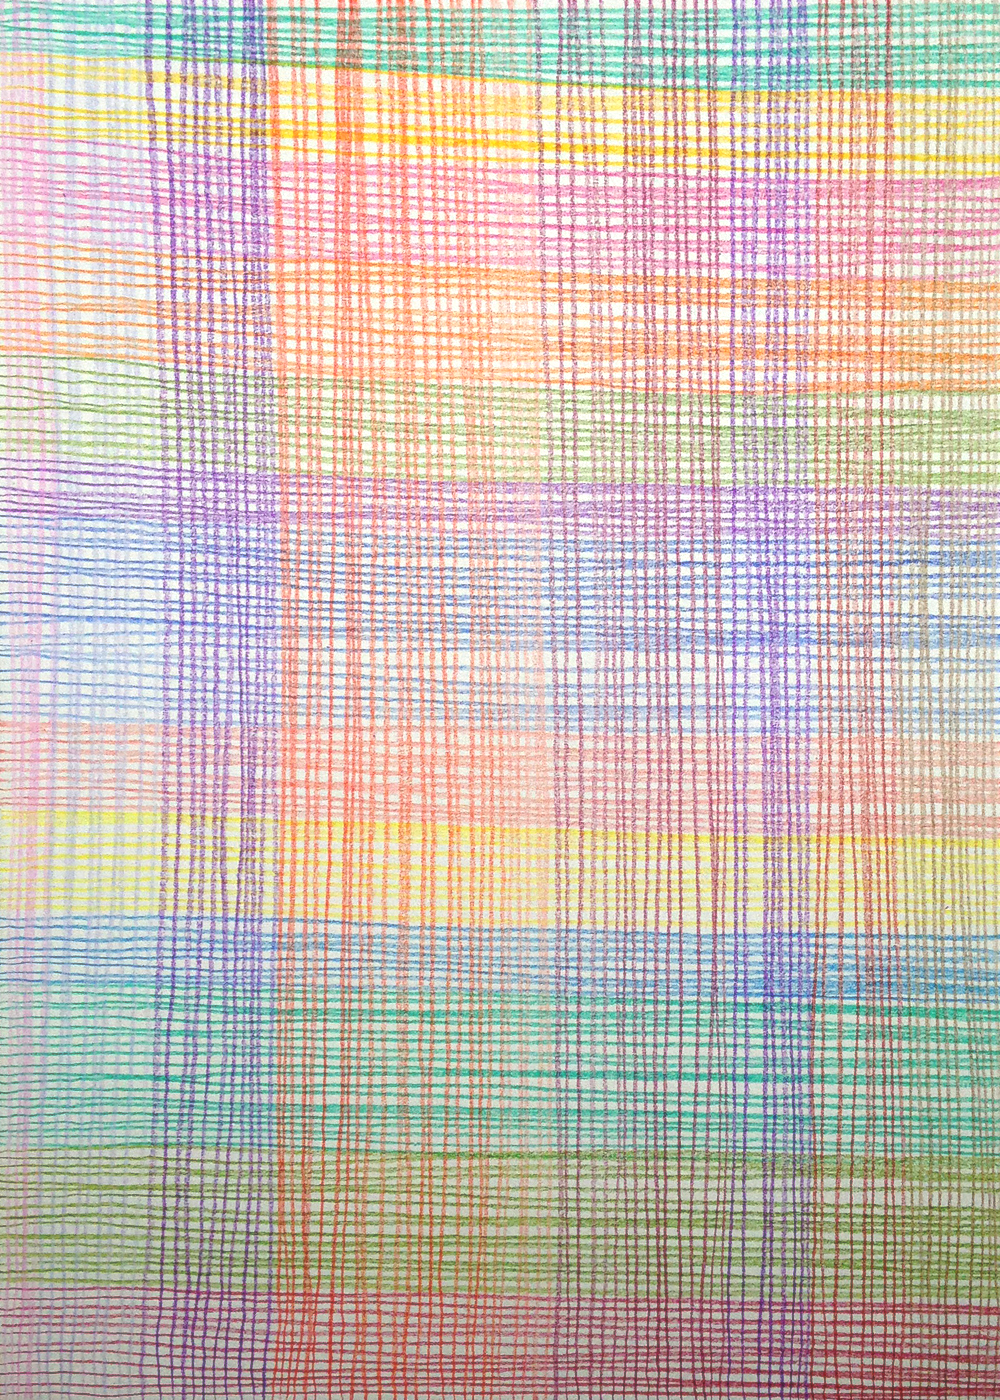 simone hamann_strings_textile10_12,7 x 17,7 colorpencil on card 2015